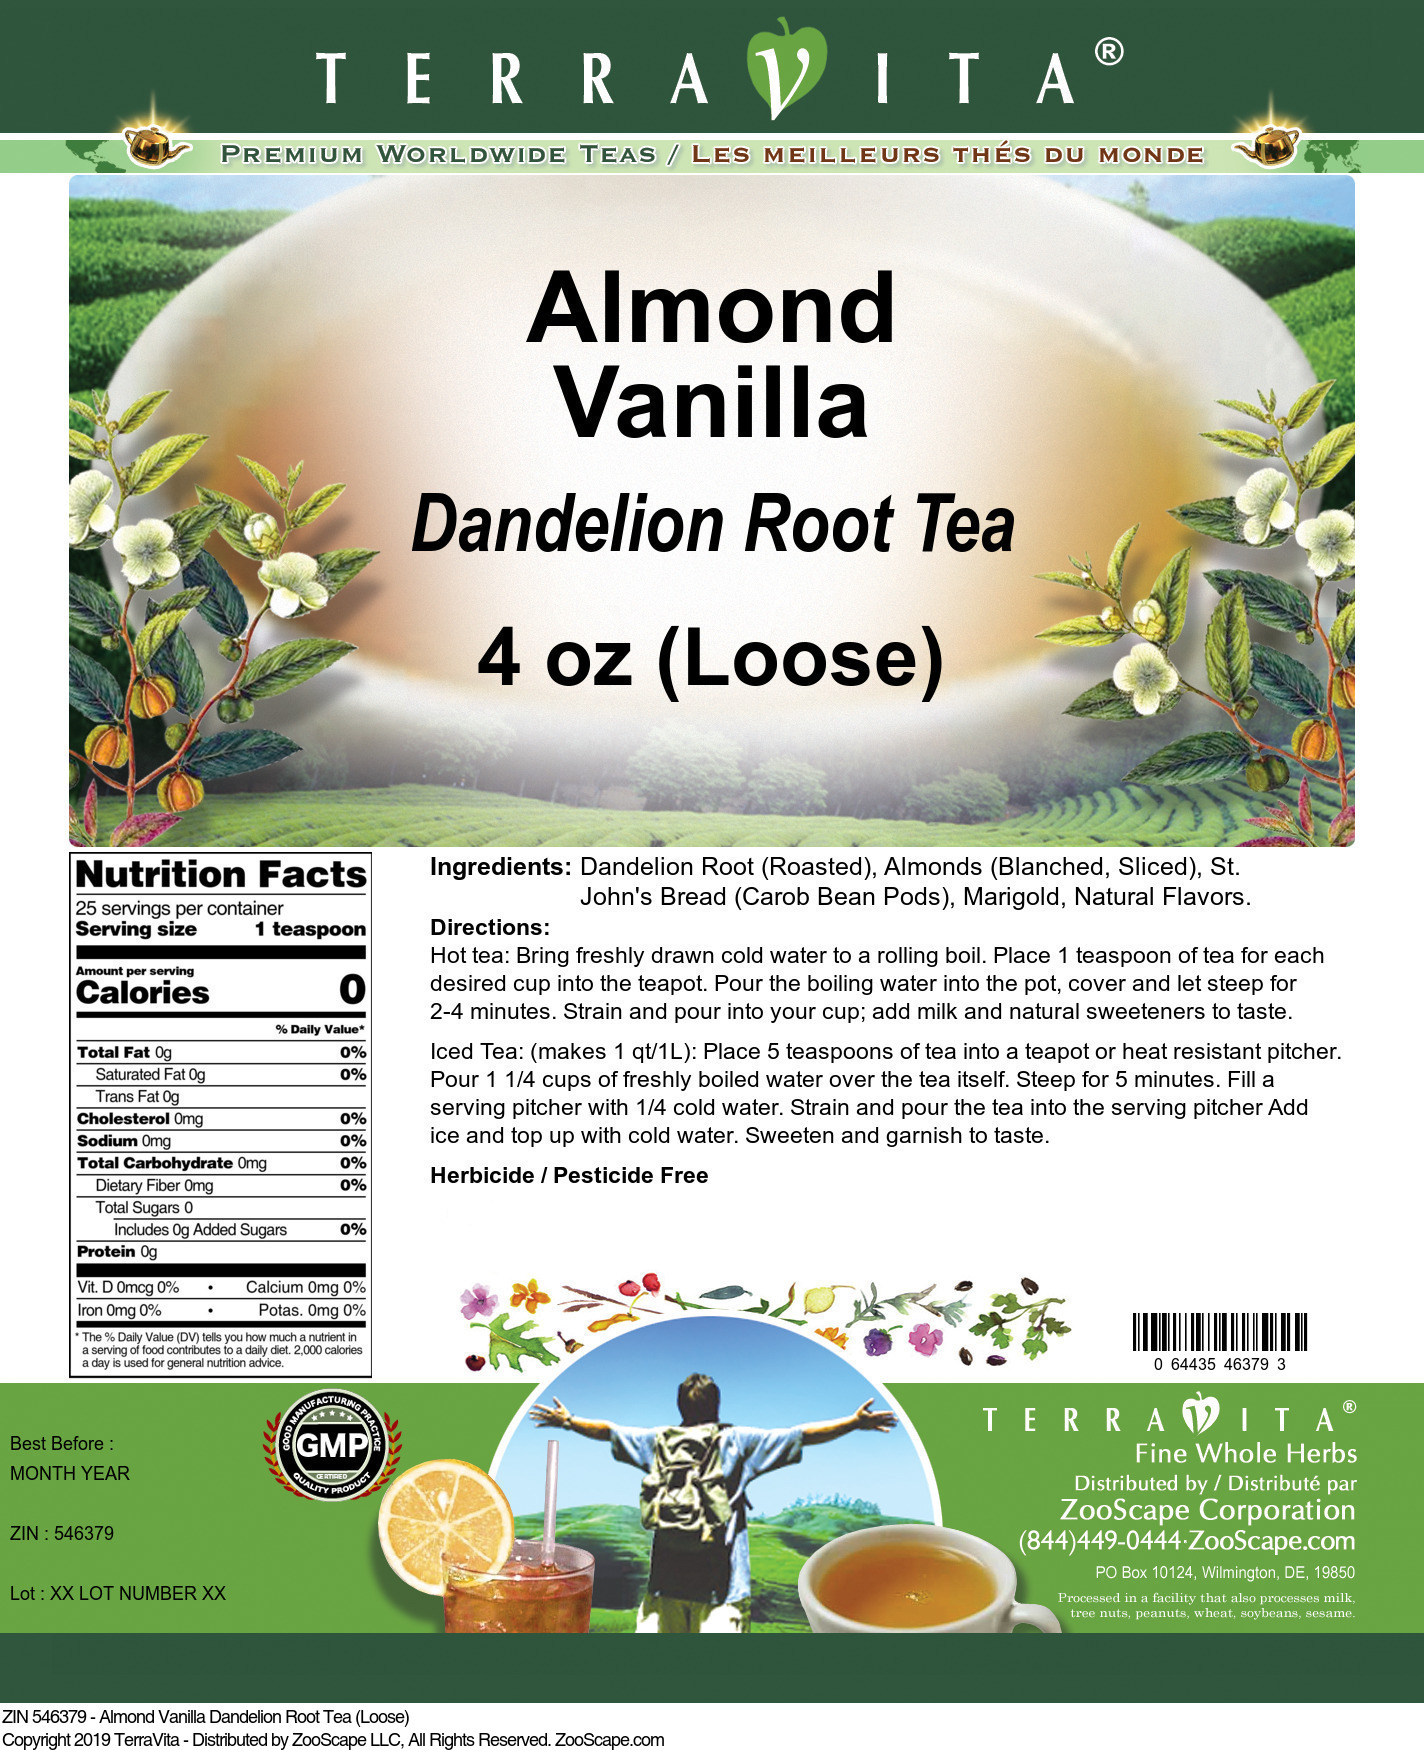 Almond Vanilla Dandelion Root Tea (Loose) - Label